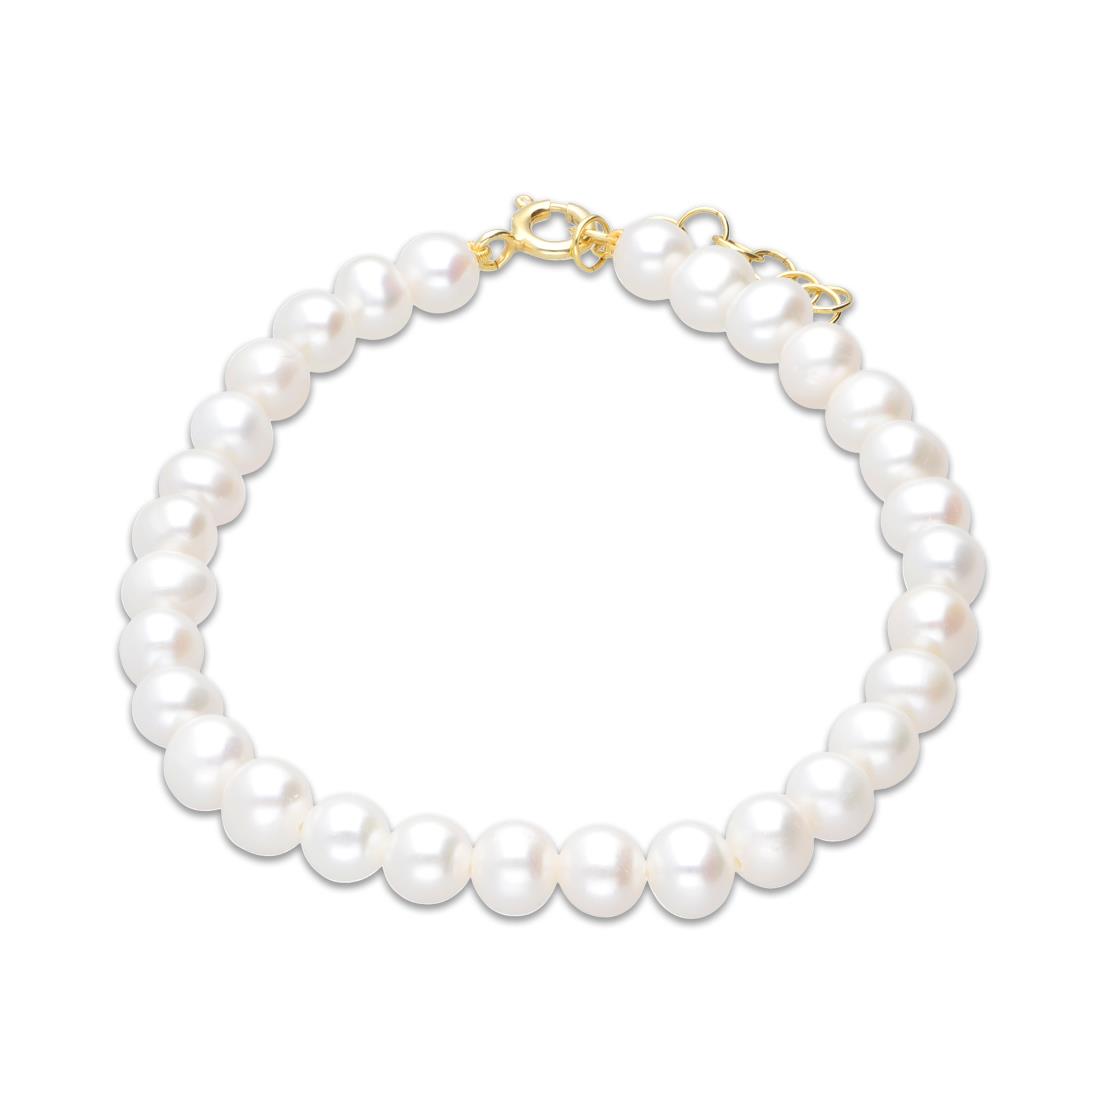 Silver bracelet with pearls - MAYUMI